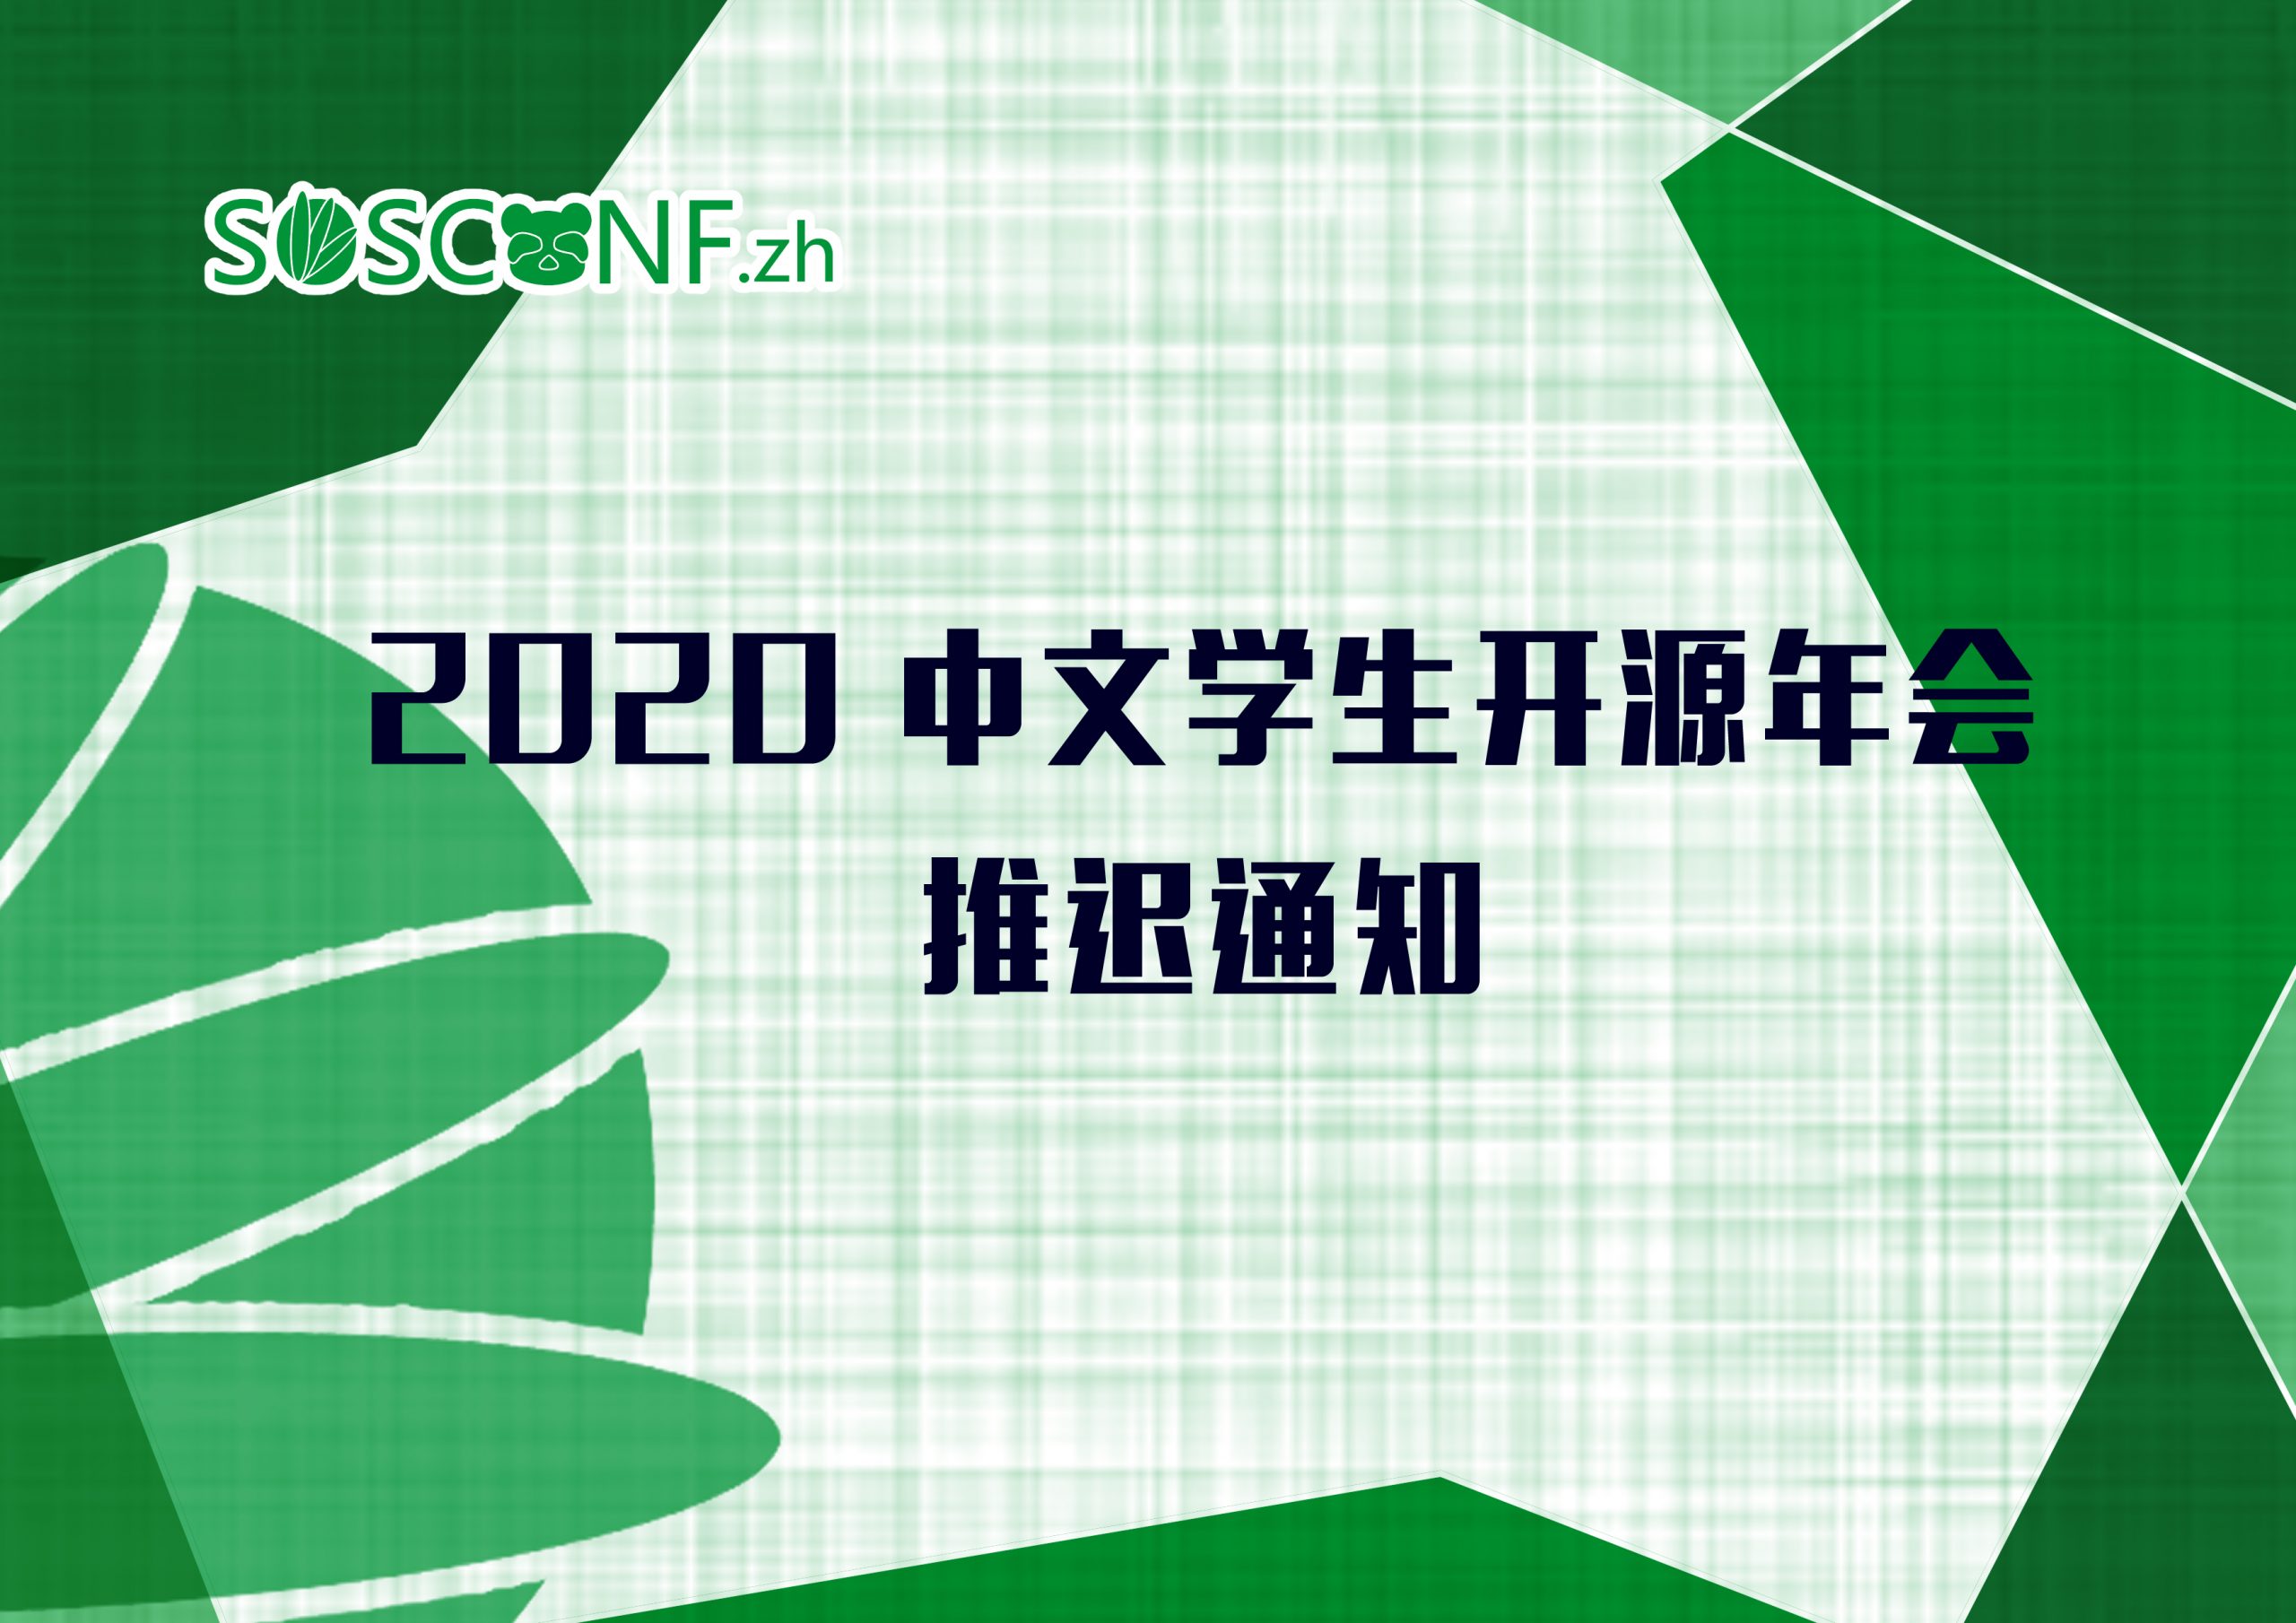 sosconf.zh 2020 推迟举办的声明